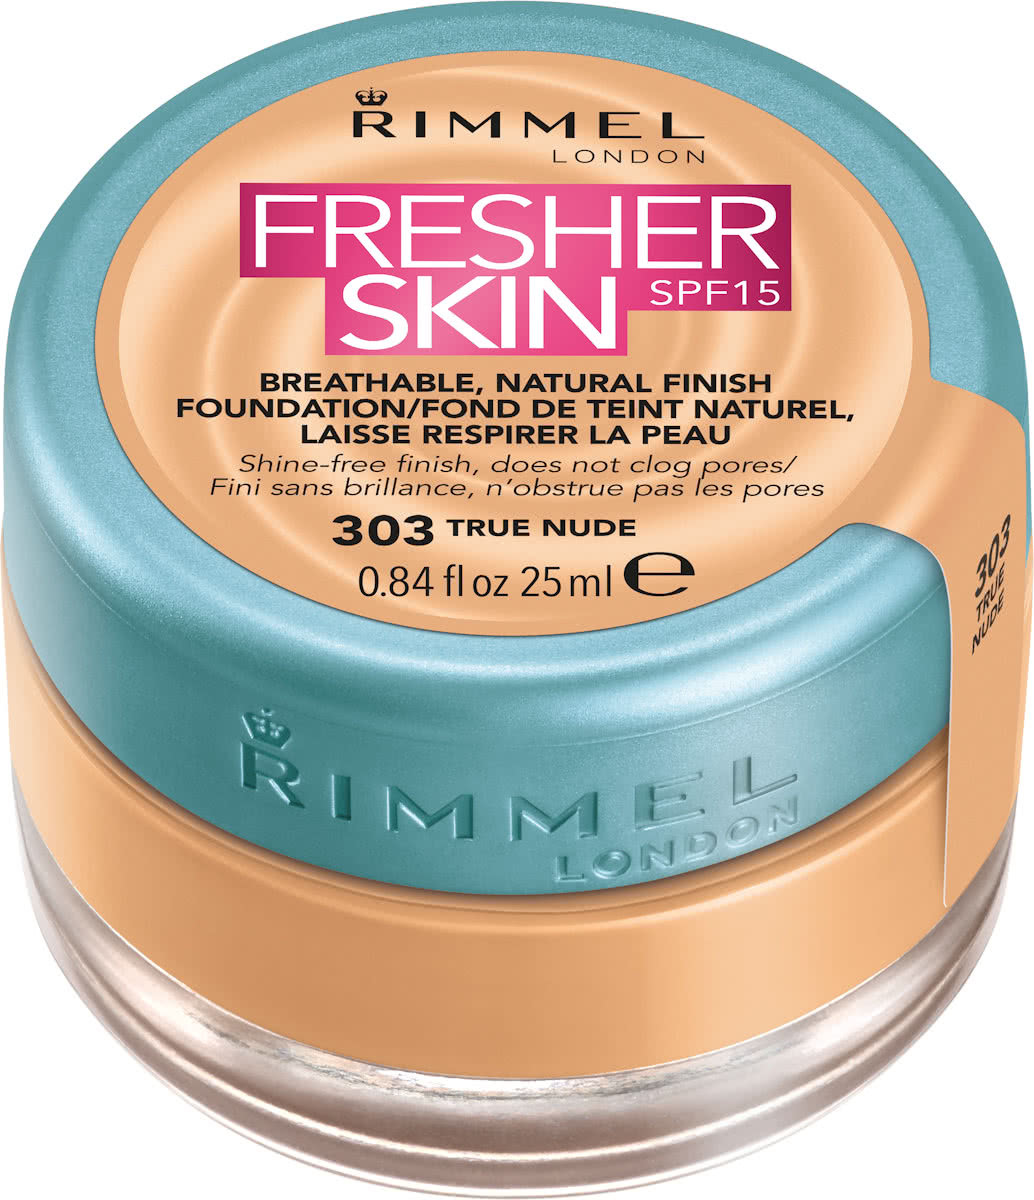 Rimmel London Fresher Skin Foundation - 303 True nude - Foundation